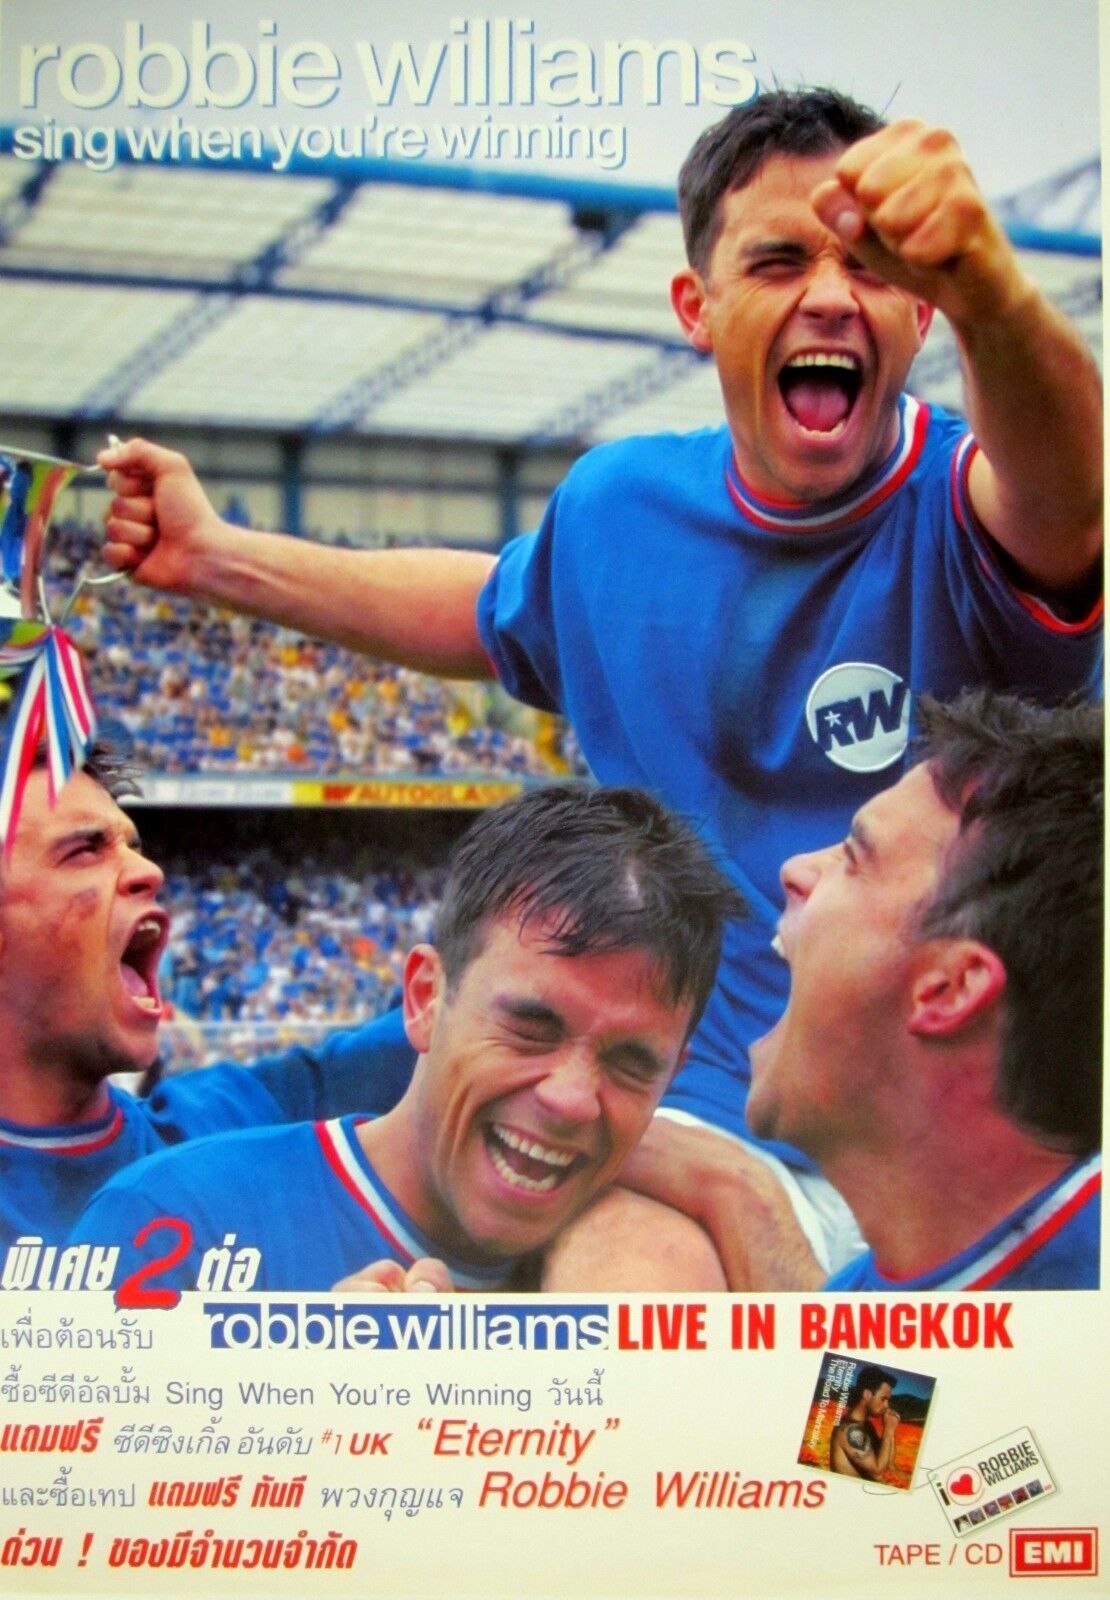 Robbie Williams 2000 Bangkok, Thailand Concert Tour Poster - Live In Bangkok